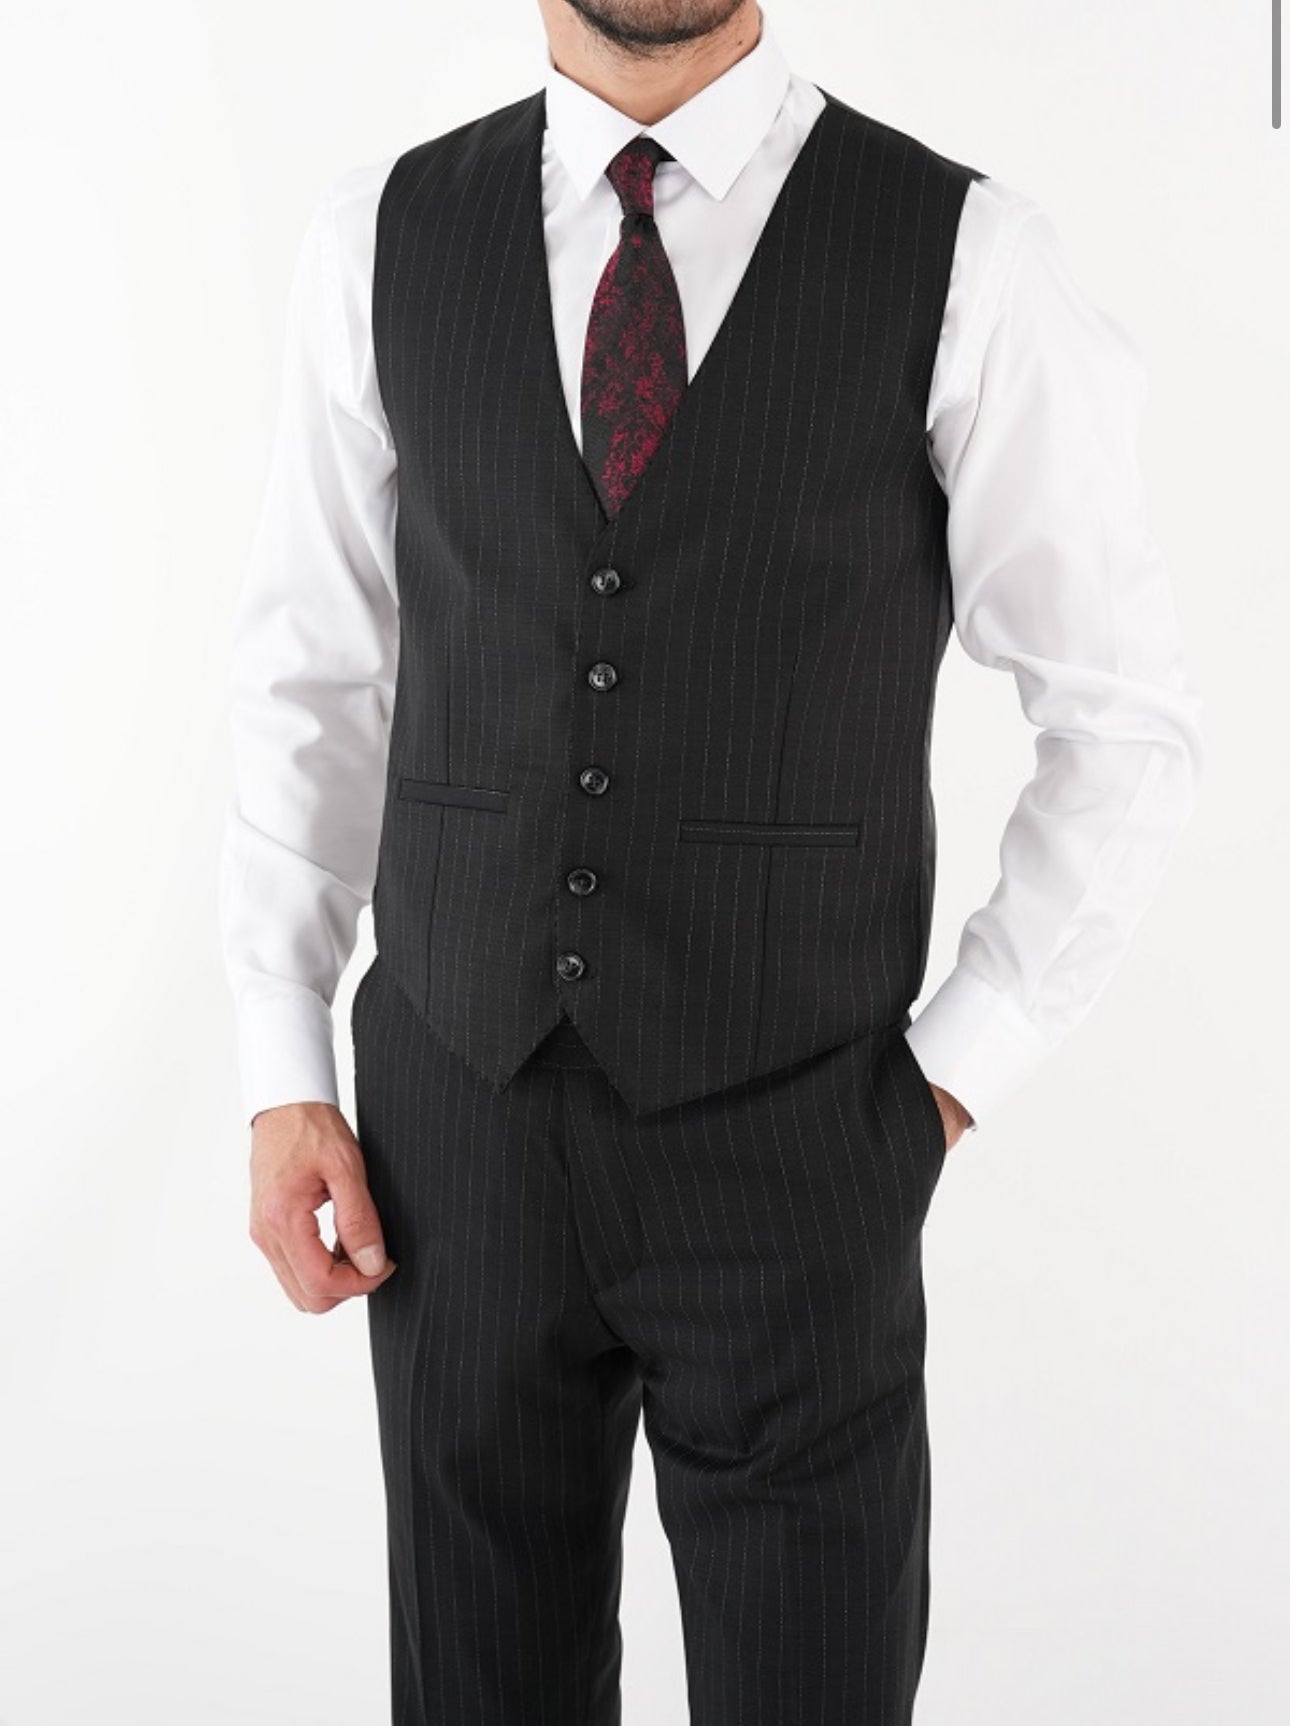 Bojoni Manly Black Slim Fit Pinstripe Suit